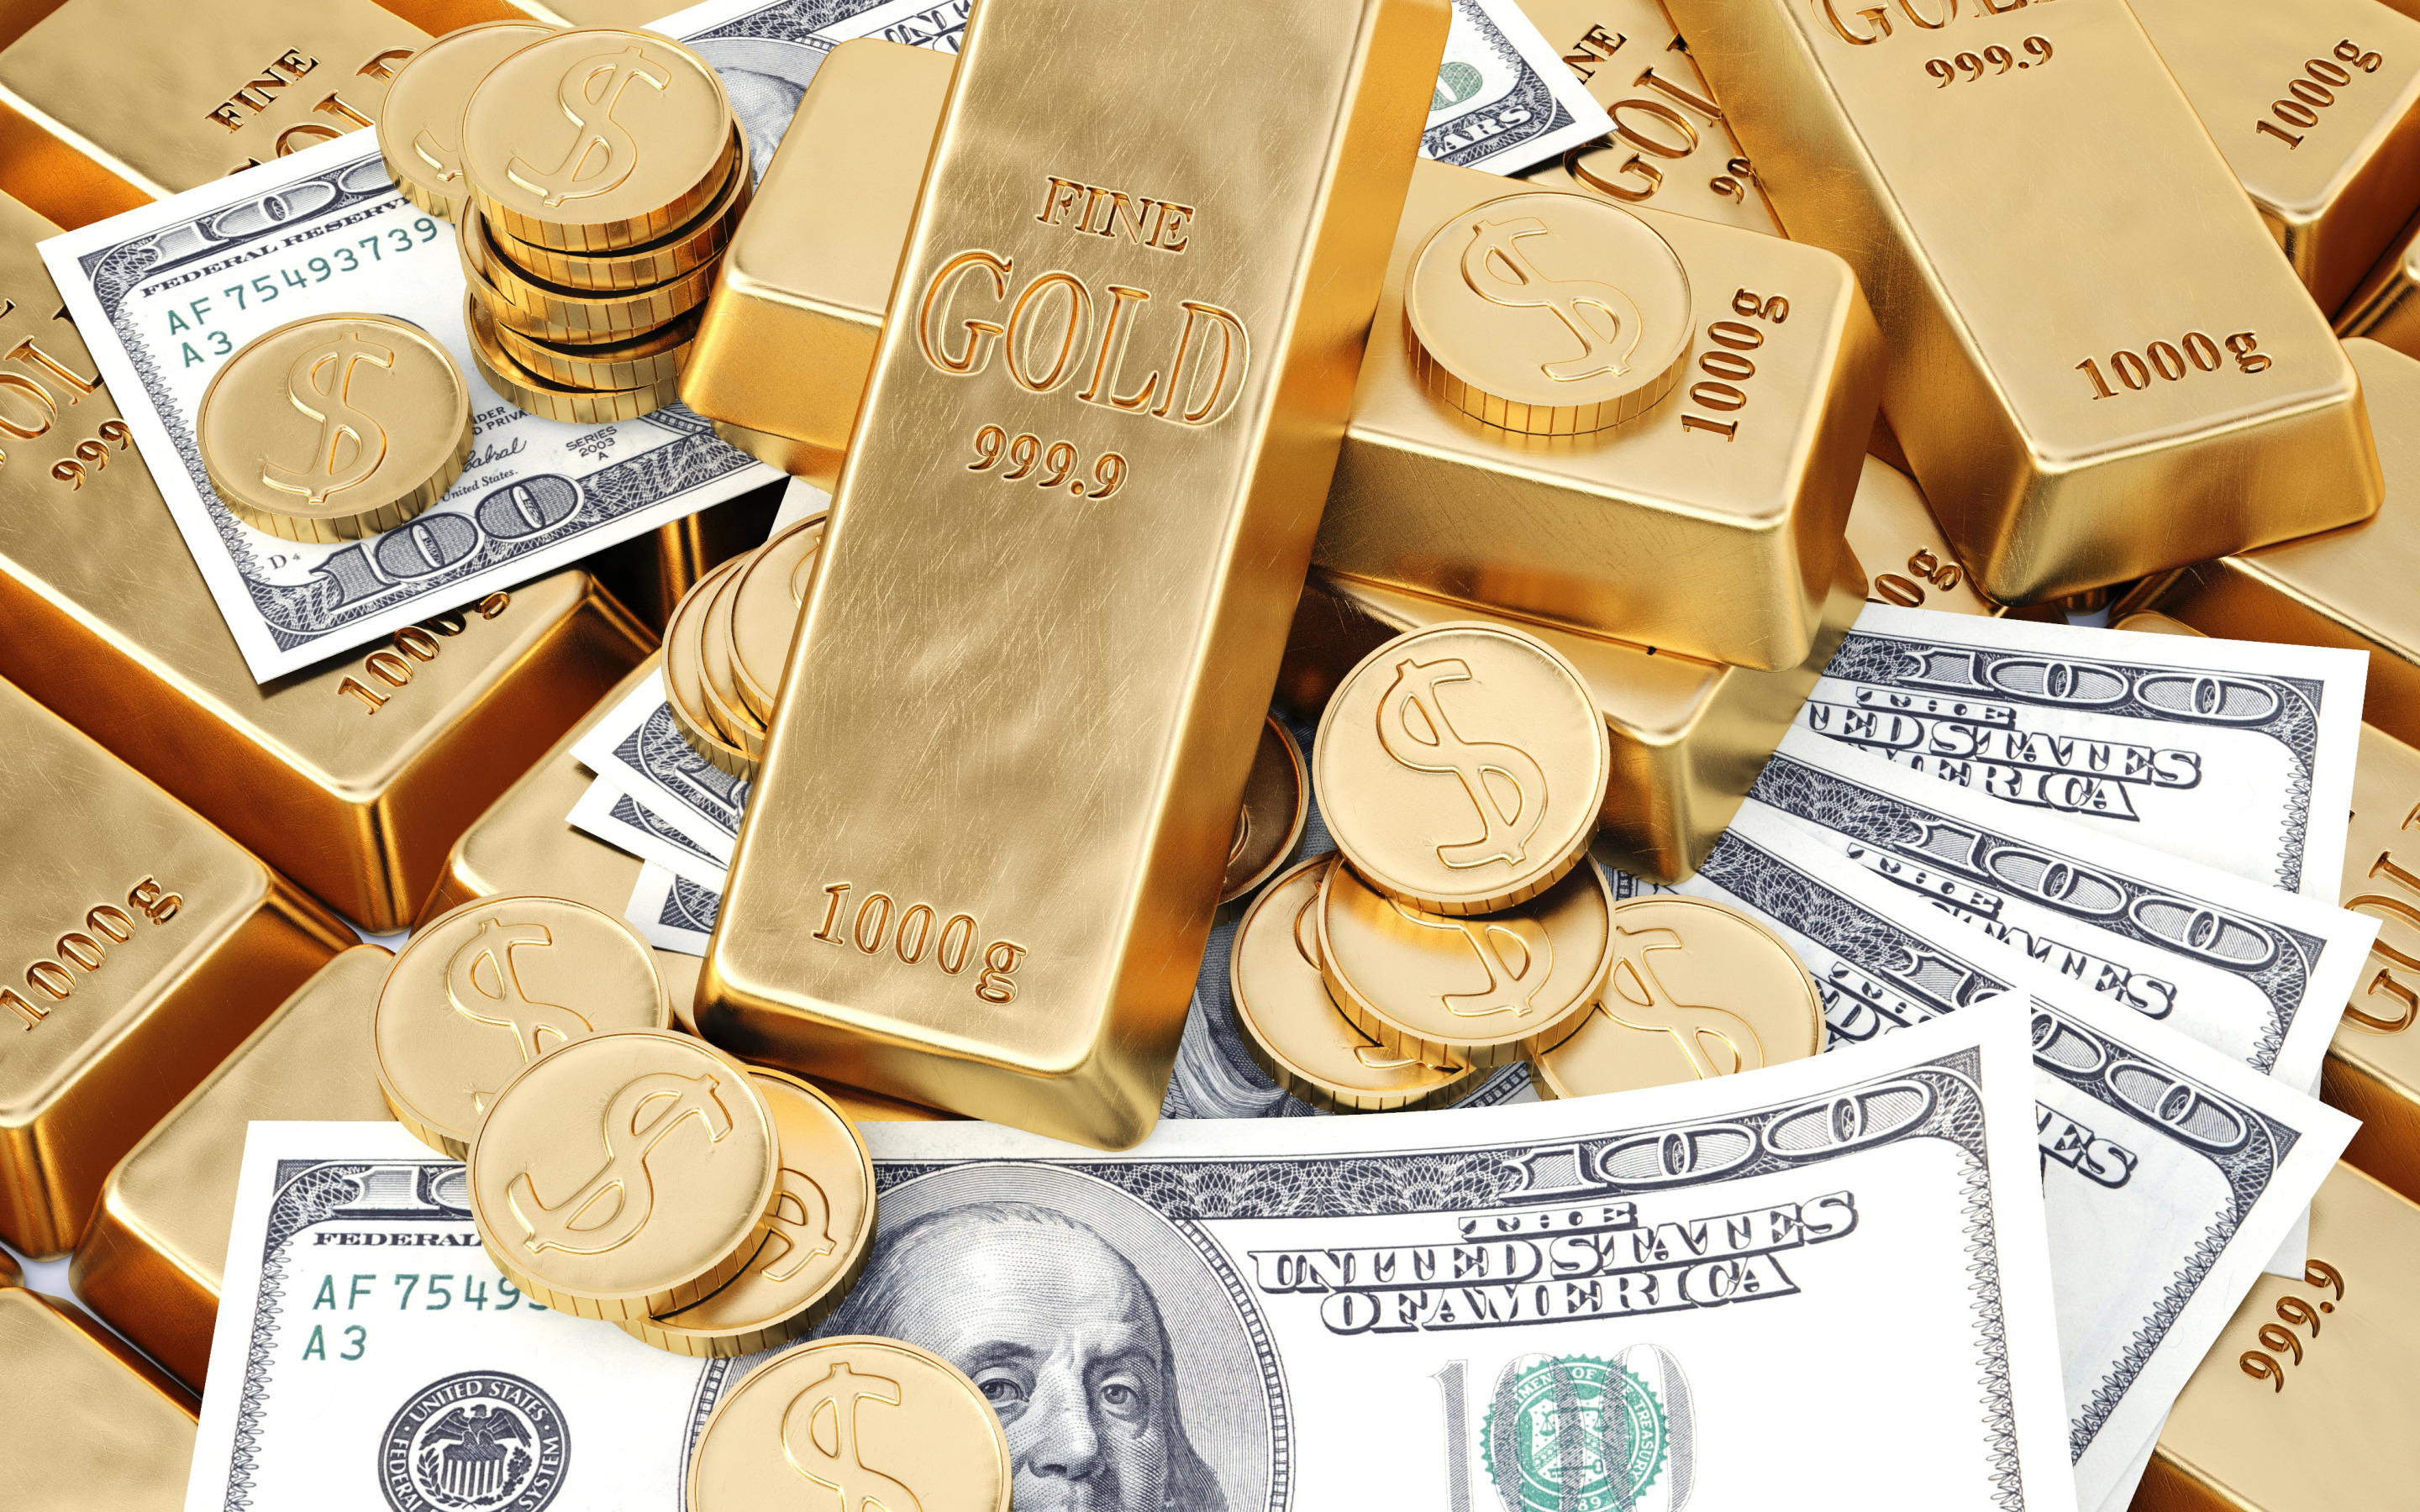 Золото евро доллар. Деньги золото. Деньги золото богатство. Обои на рабочий стол к деньгам и богатству. Обои золото.